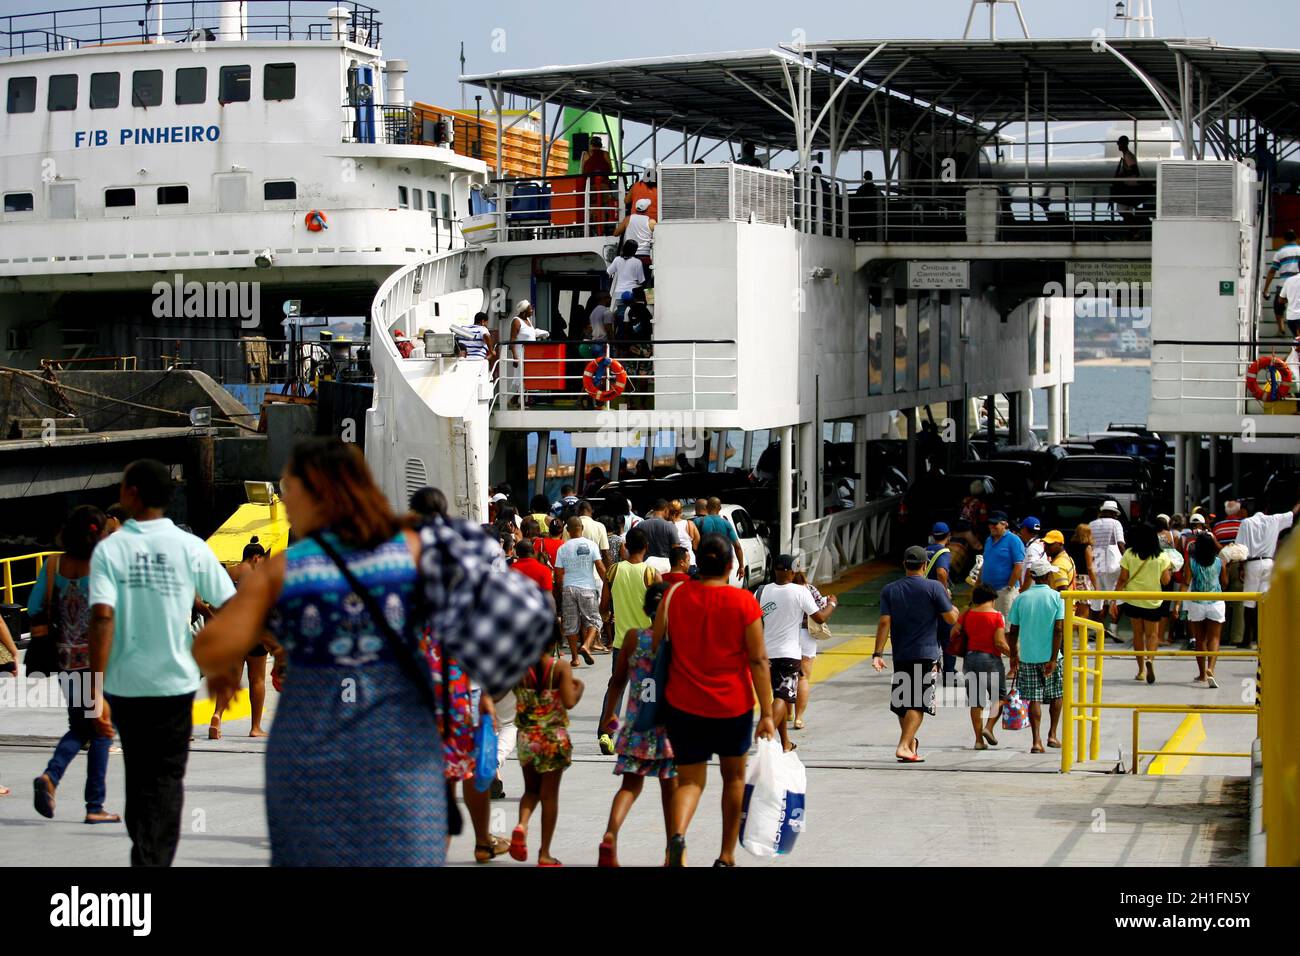 salvador, bahia / brazil - september 21, 2014: Ferry Anna Nery is seen at the Sao Joaquim Terminal in Salvador, bound for Itaparica Island. *** Local Stock Photo